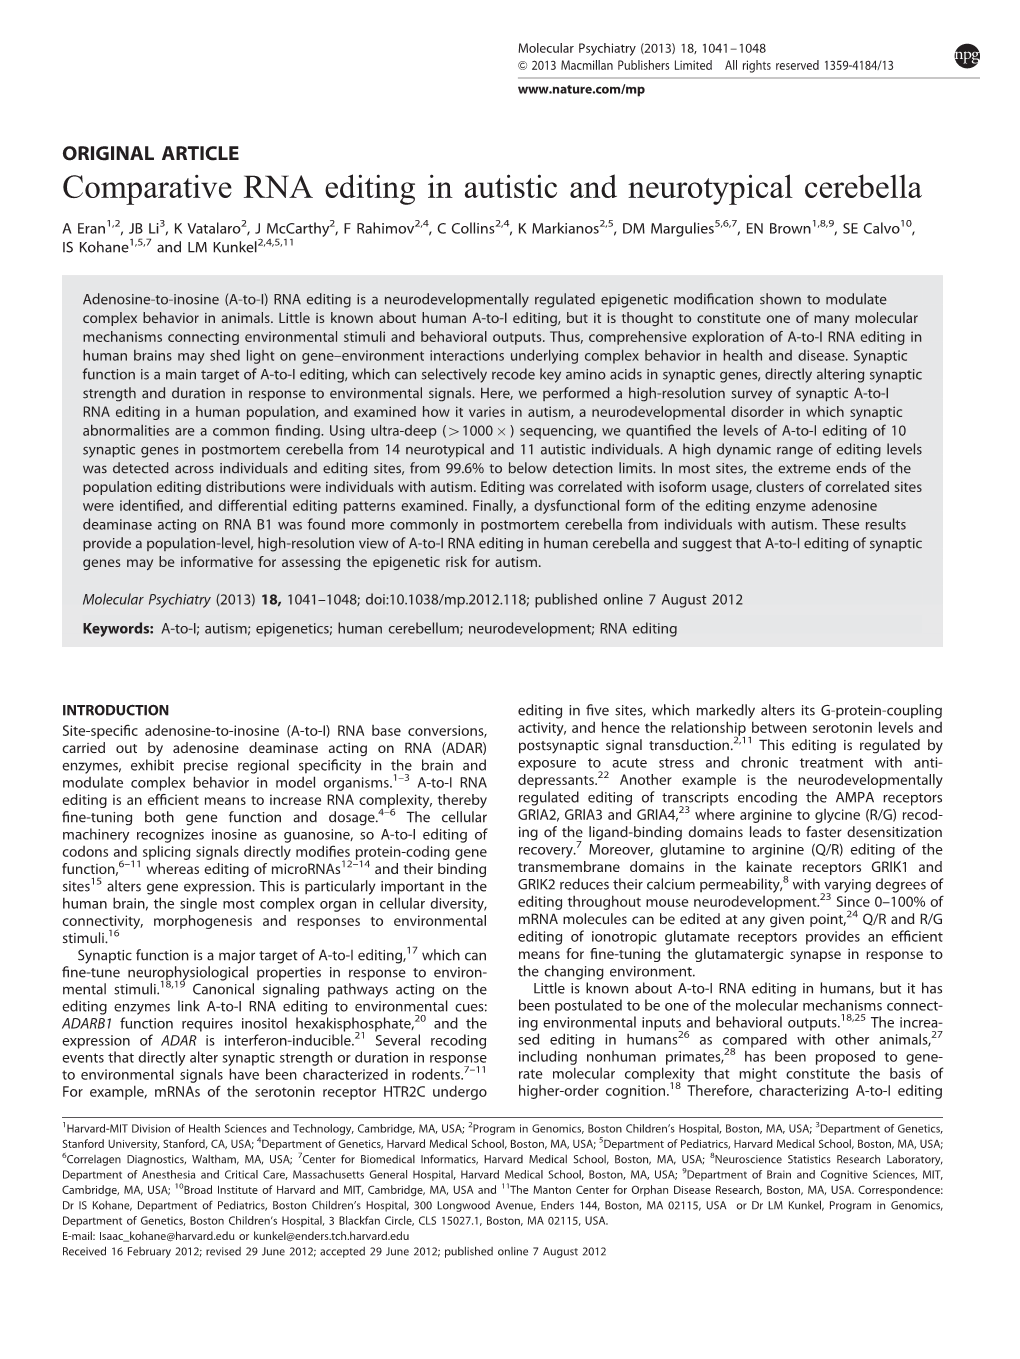 Comparative RNA Editing in Autistic and Neurotypical Cerebella